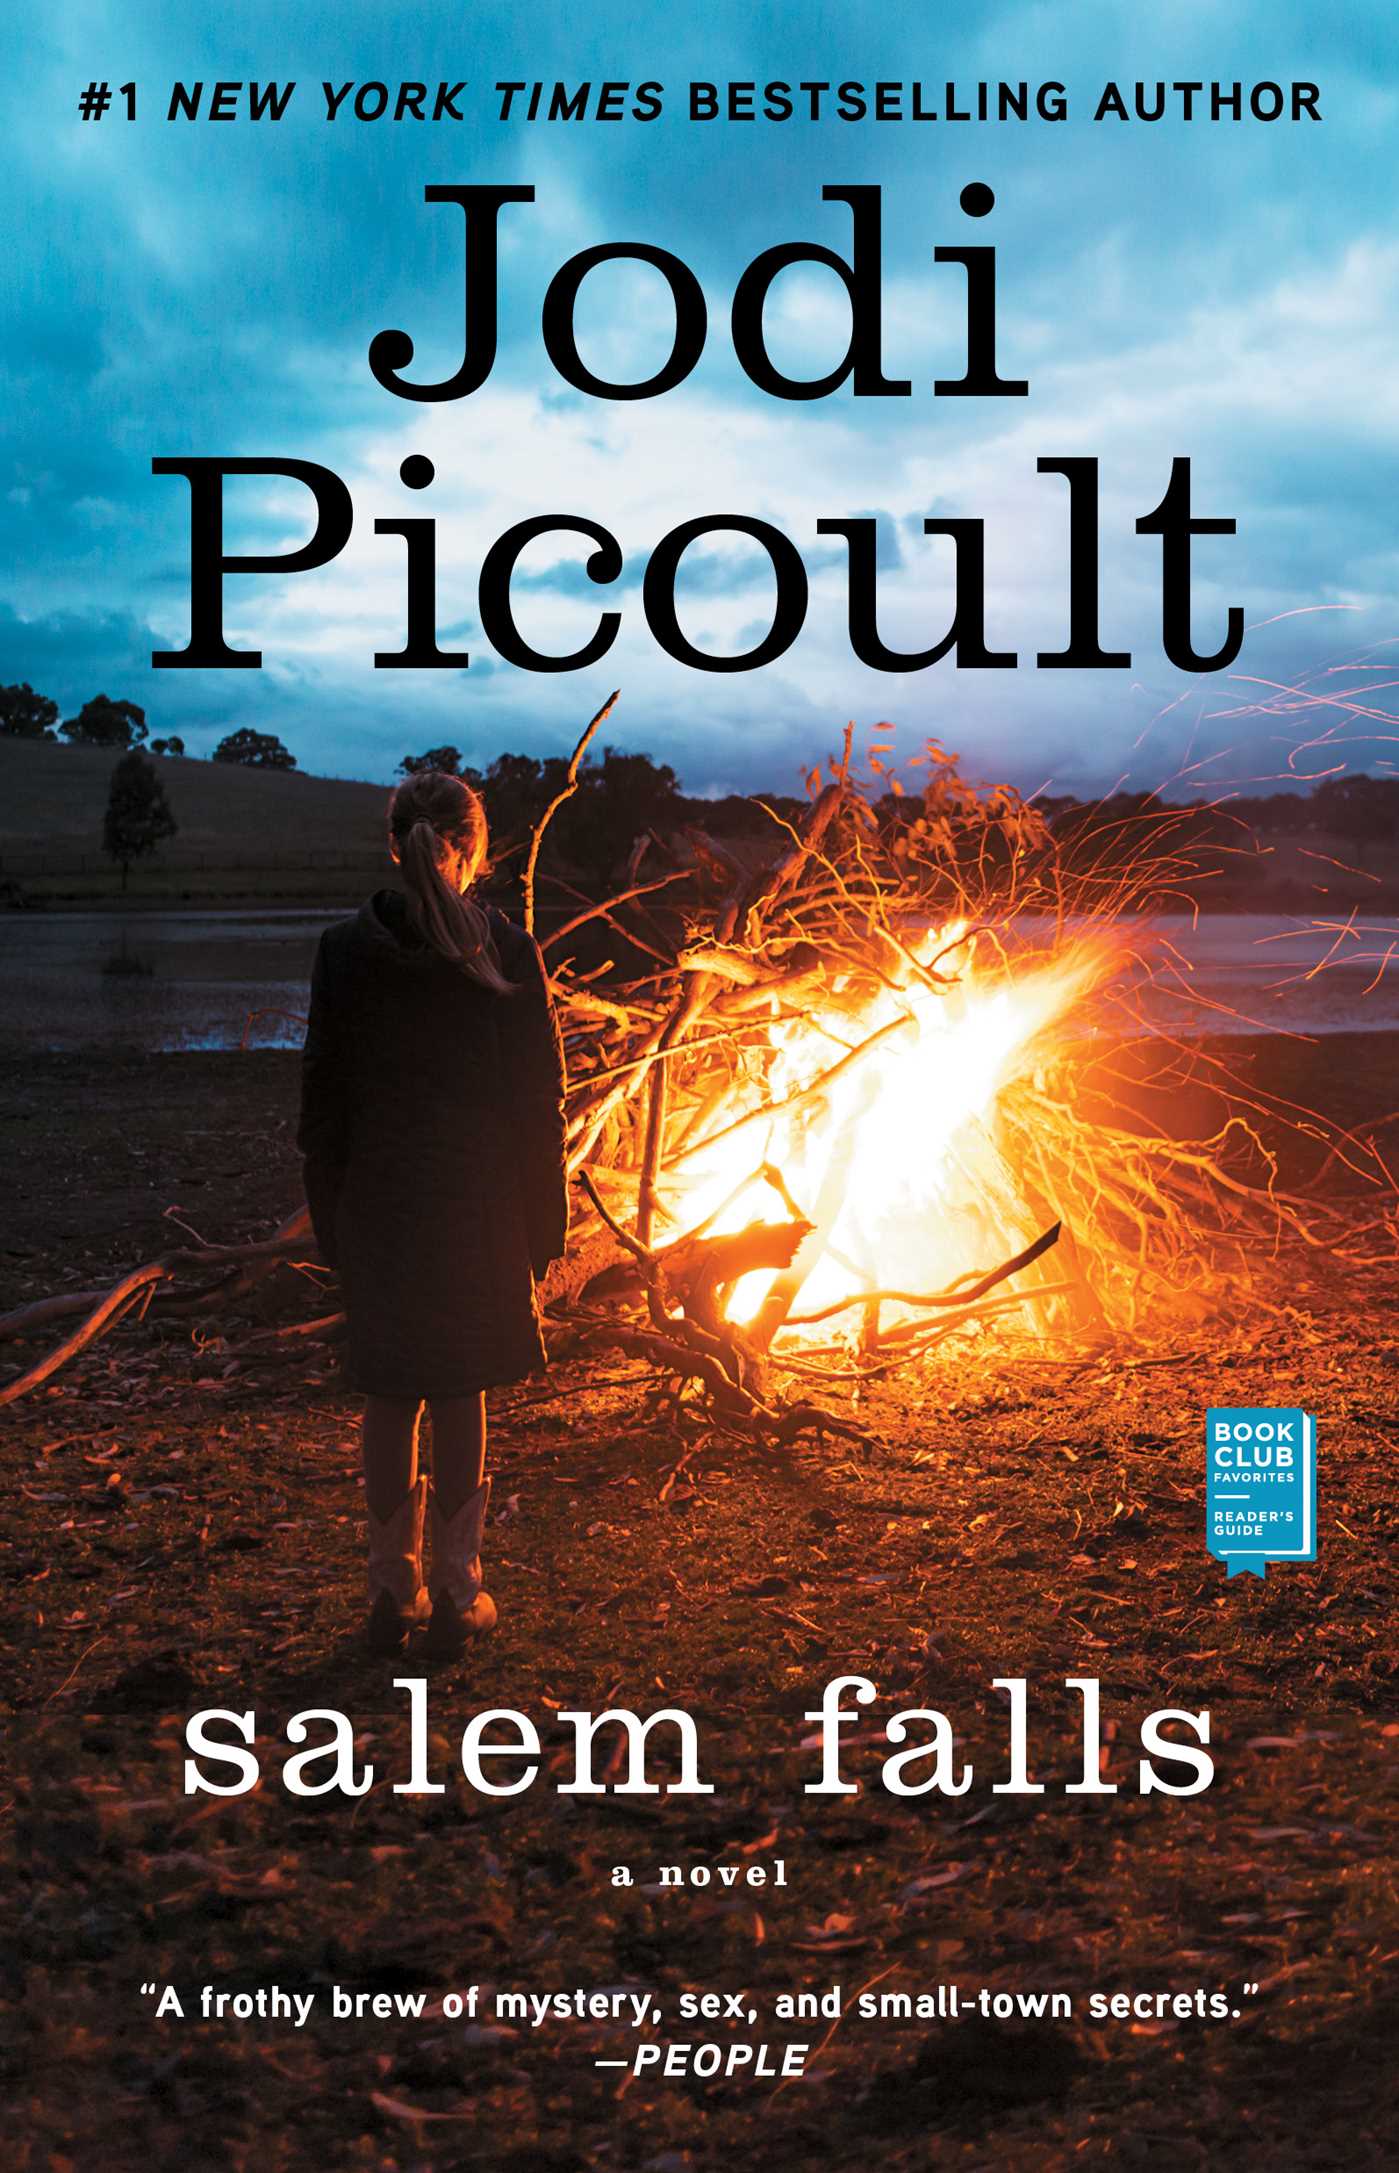 Salem Falls - Jodi Picoult